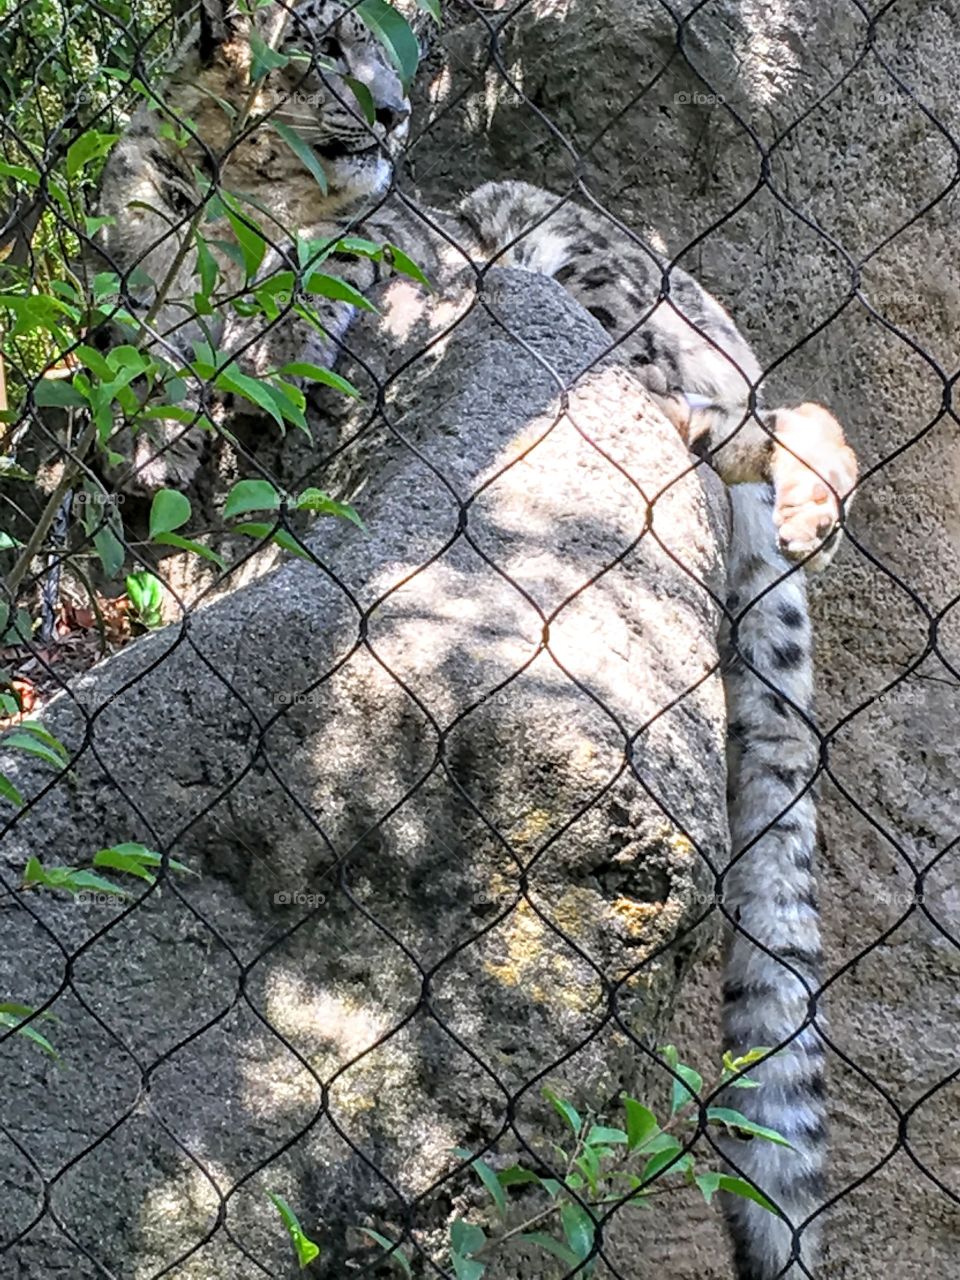 White Leopard at the Sacramento Zoo